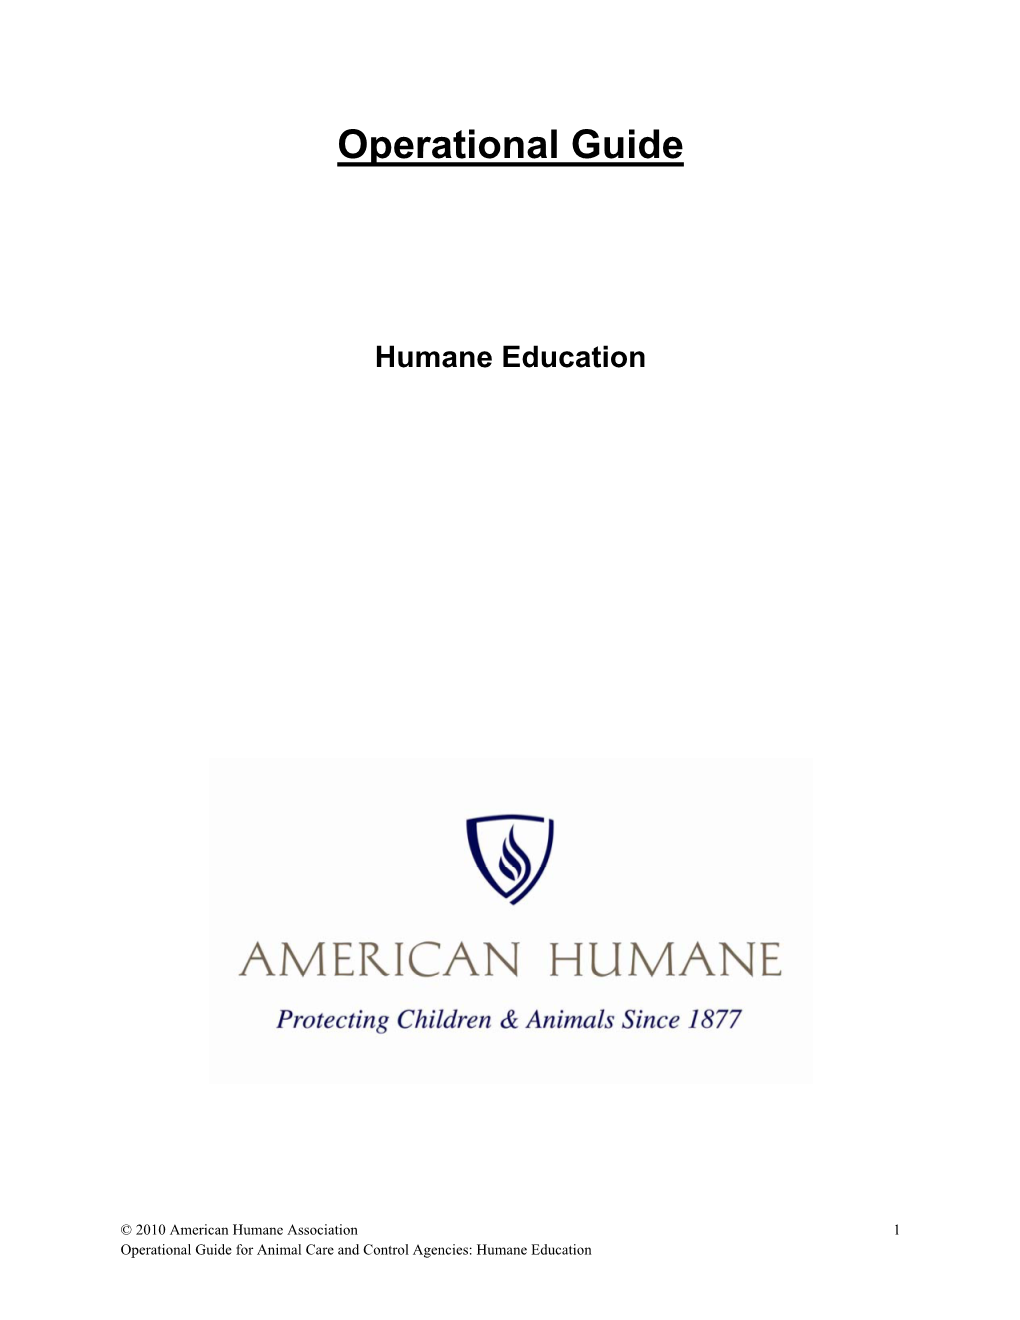 Operational Guide Humane Education